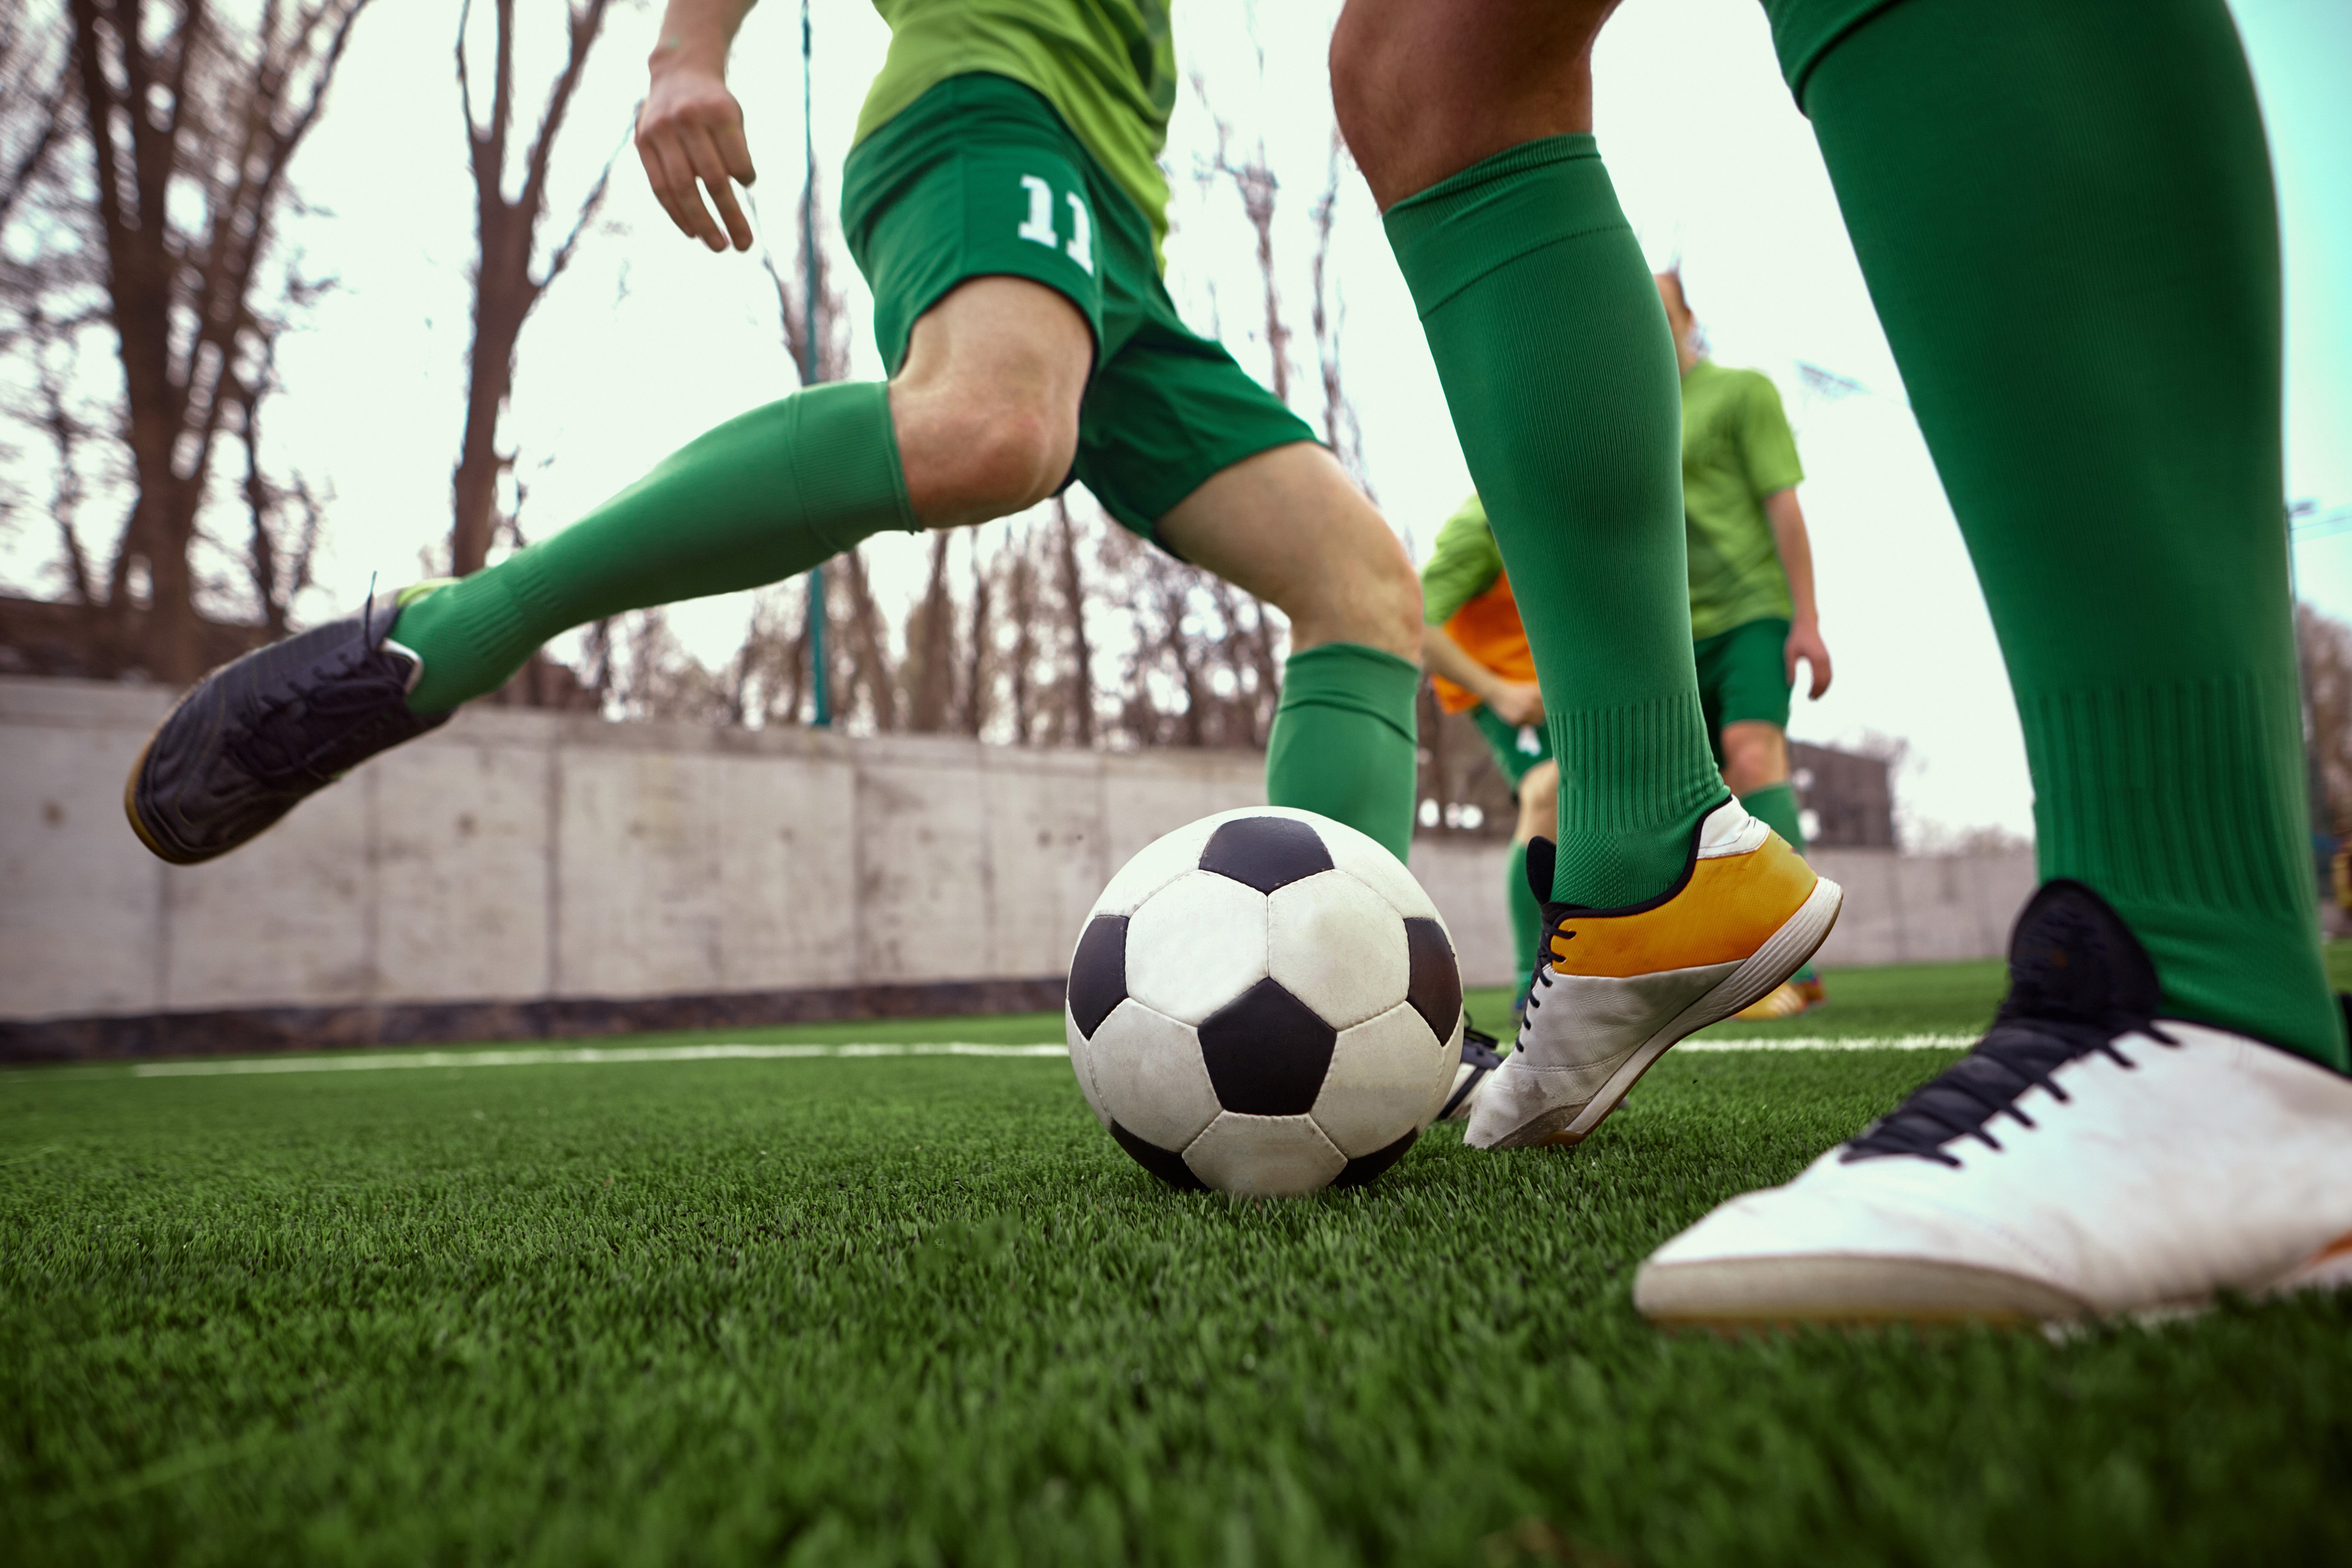 thq-legs-of-soccer-football-player-2021-08-26-17-41-38-utc